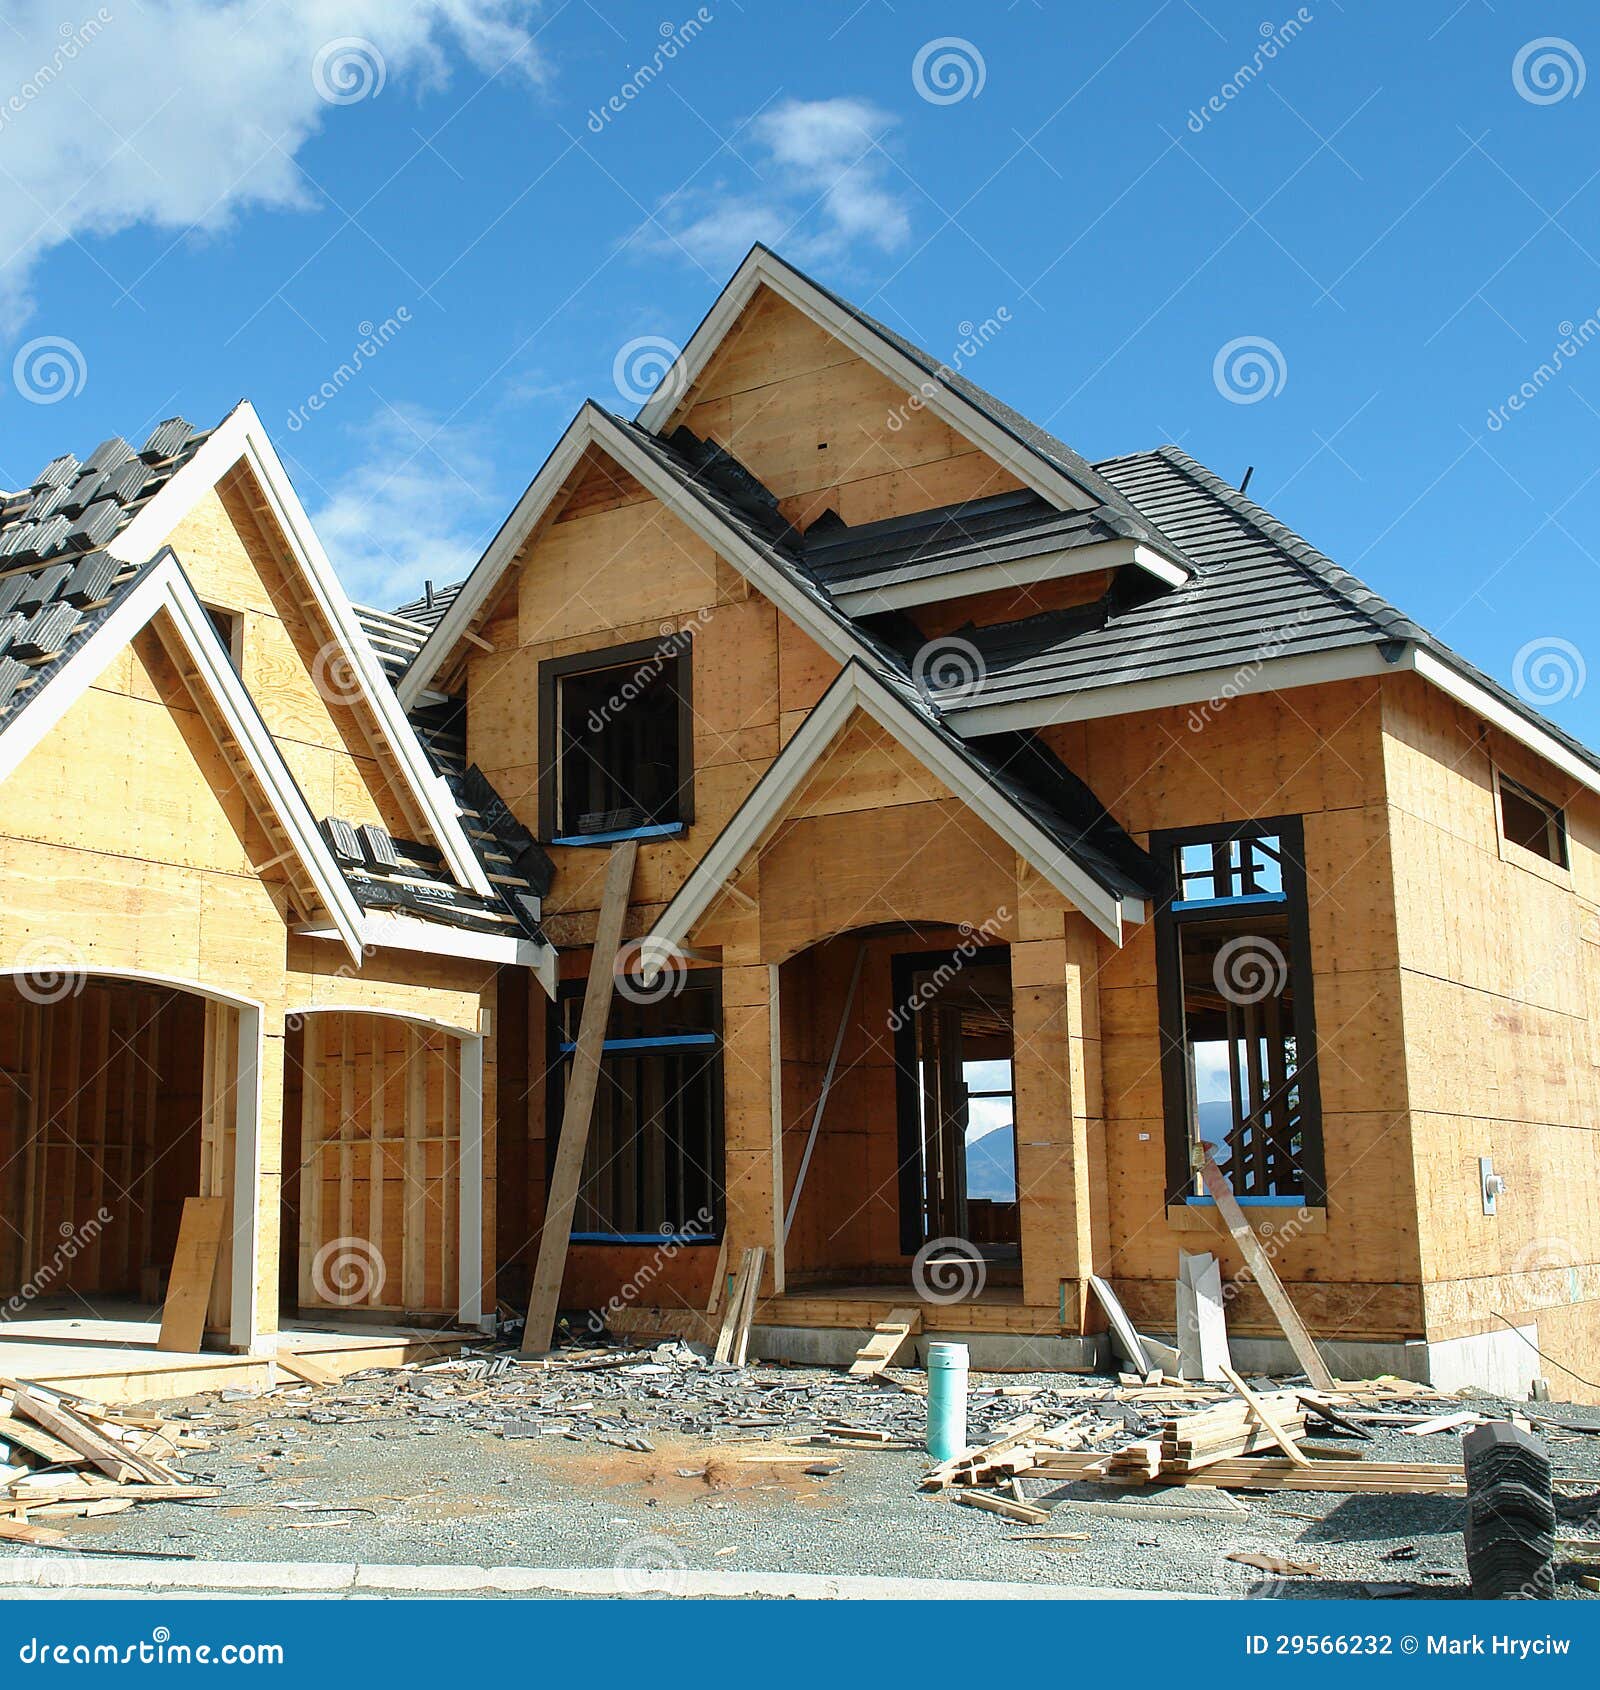 house construction exterior